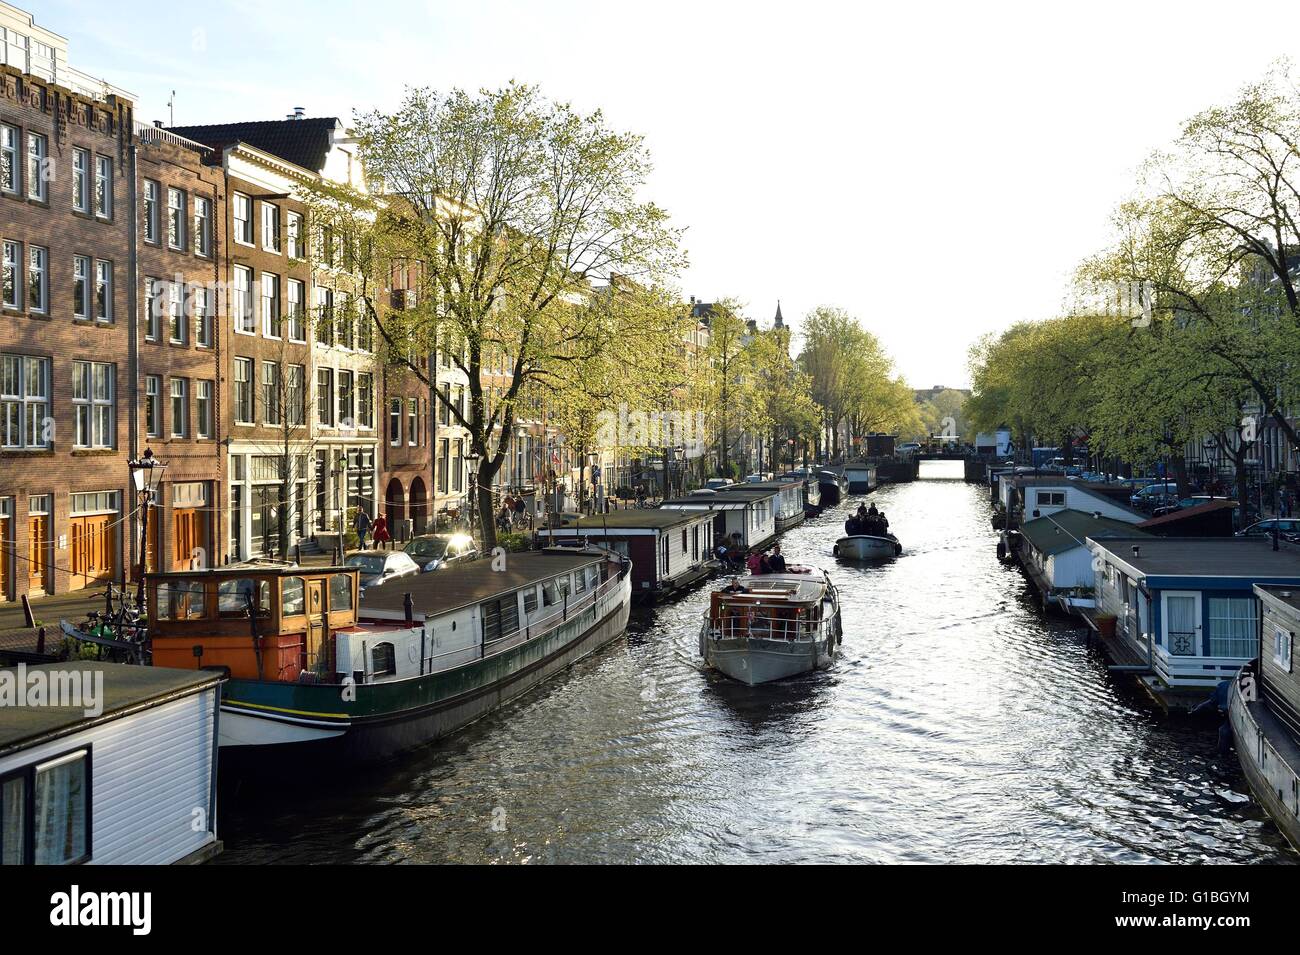 Where to Stay in Amsterdam: Best Hotels & Neighborhoods – Earth Trekkers